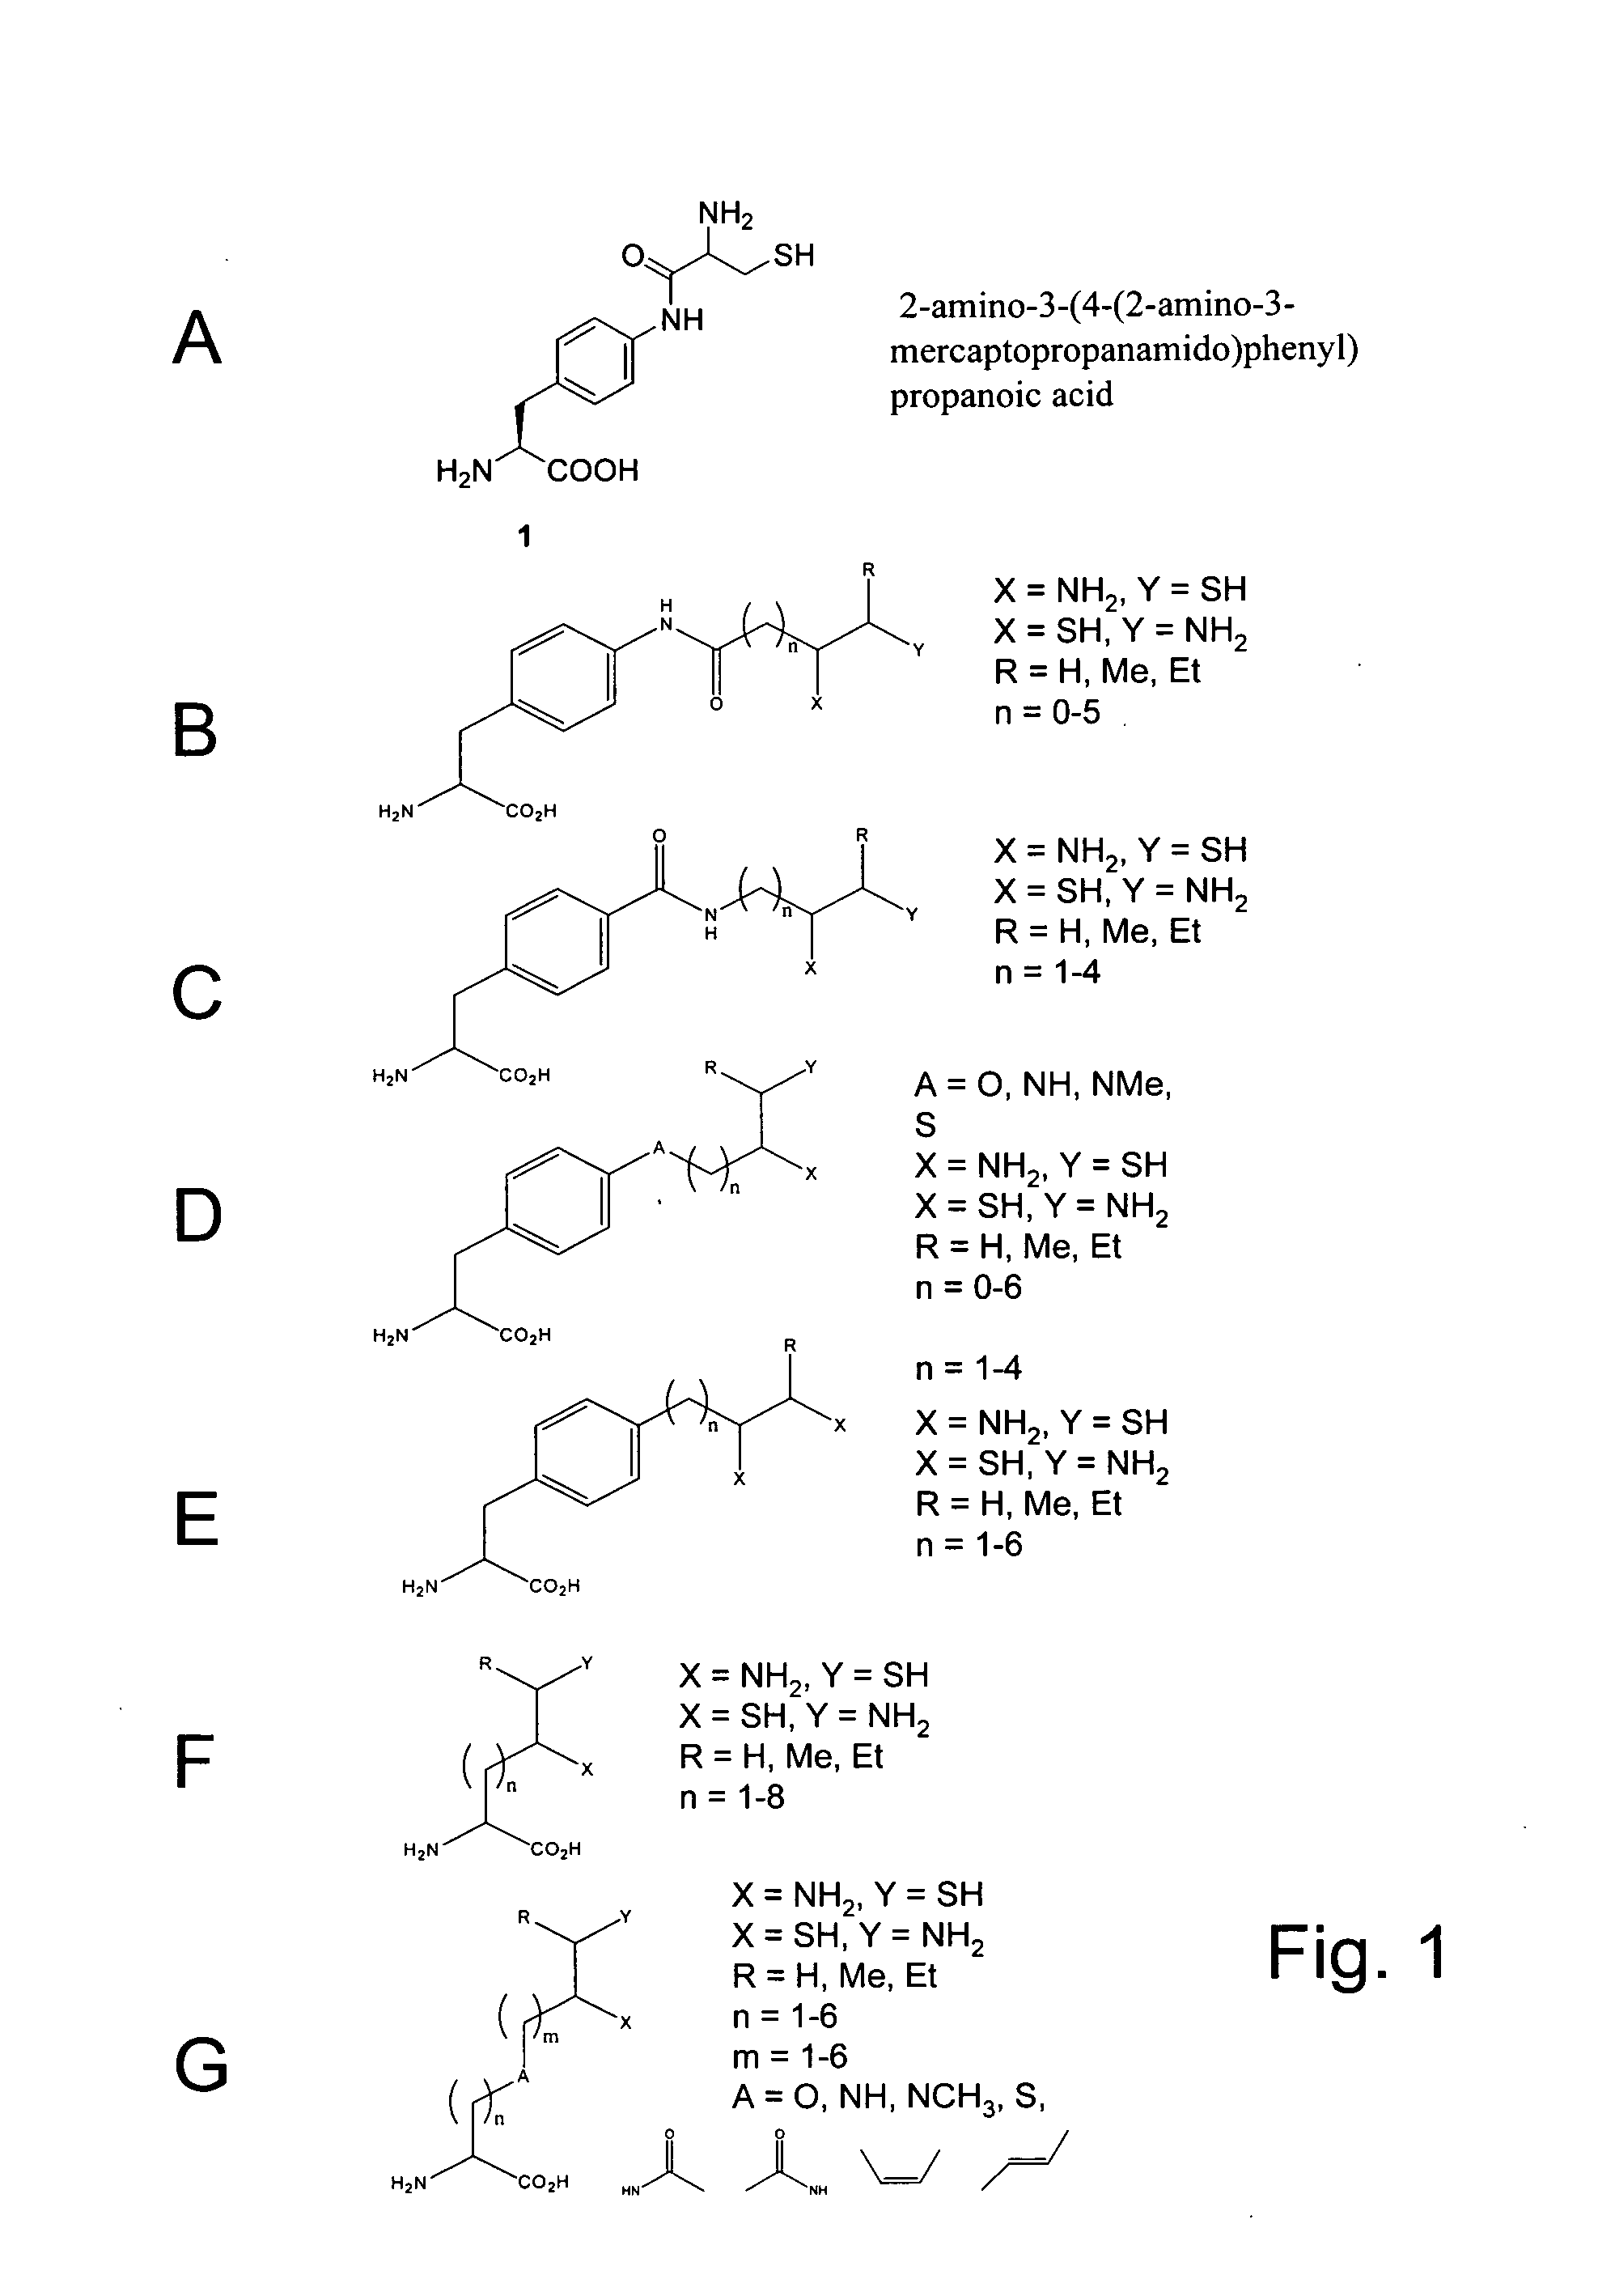 In vivo incorporation of an unnatural amino acid comprising a 1,2-aminothiol group